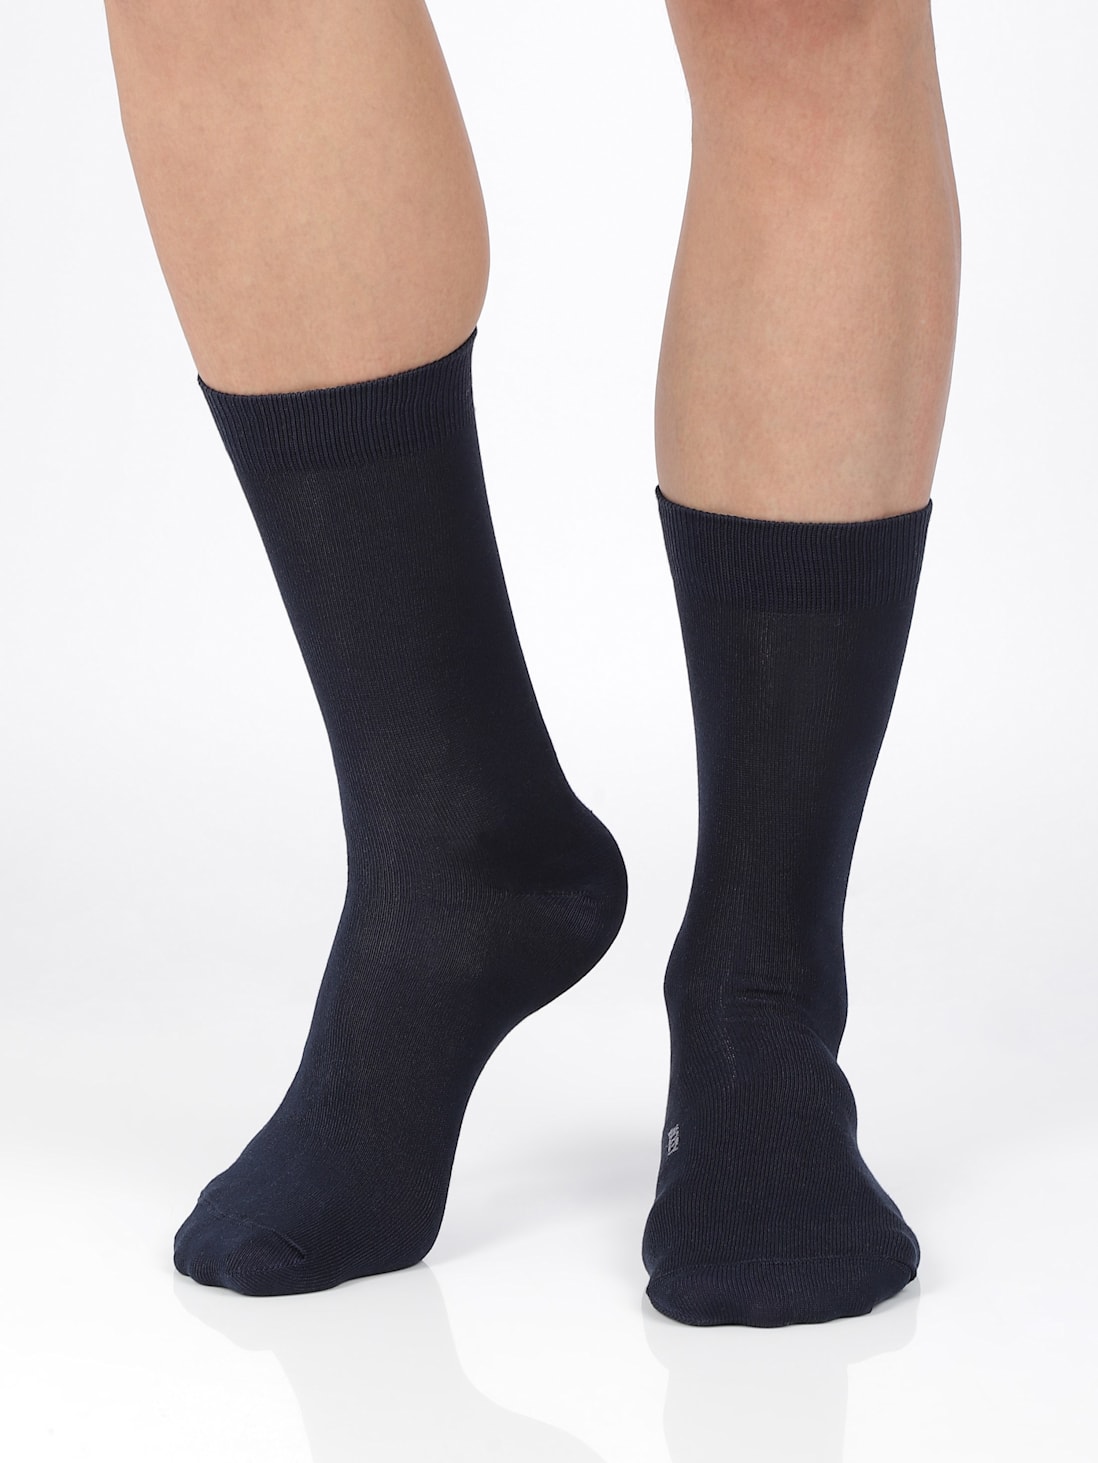 Buy Men's Mercerized Cotton Stretch Crew Length Socks with Stay Fresh ...